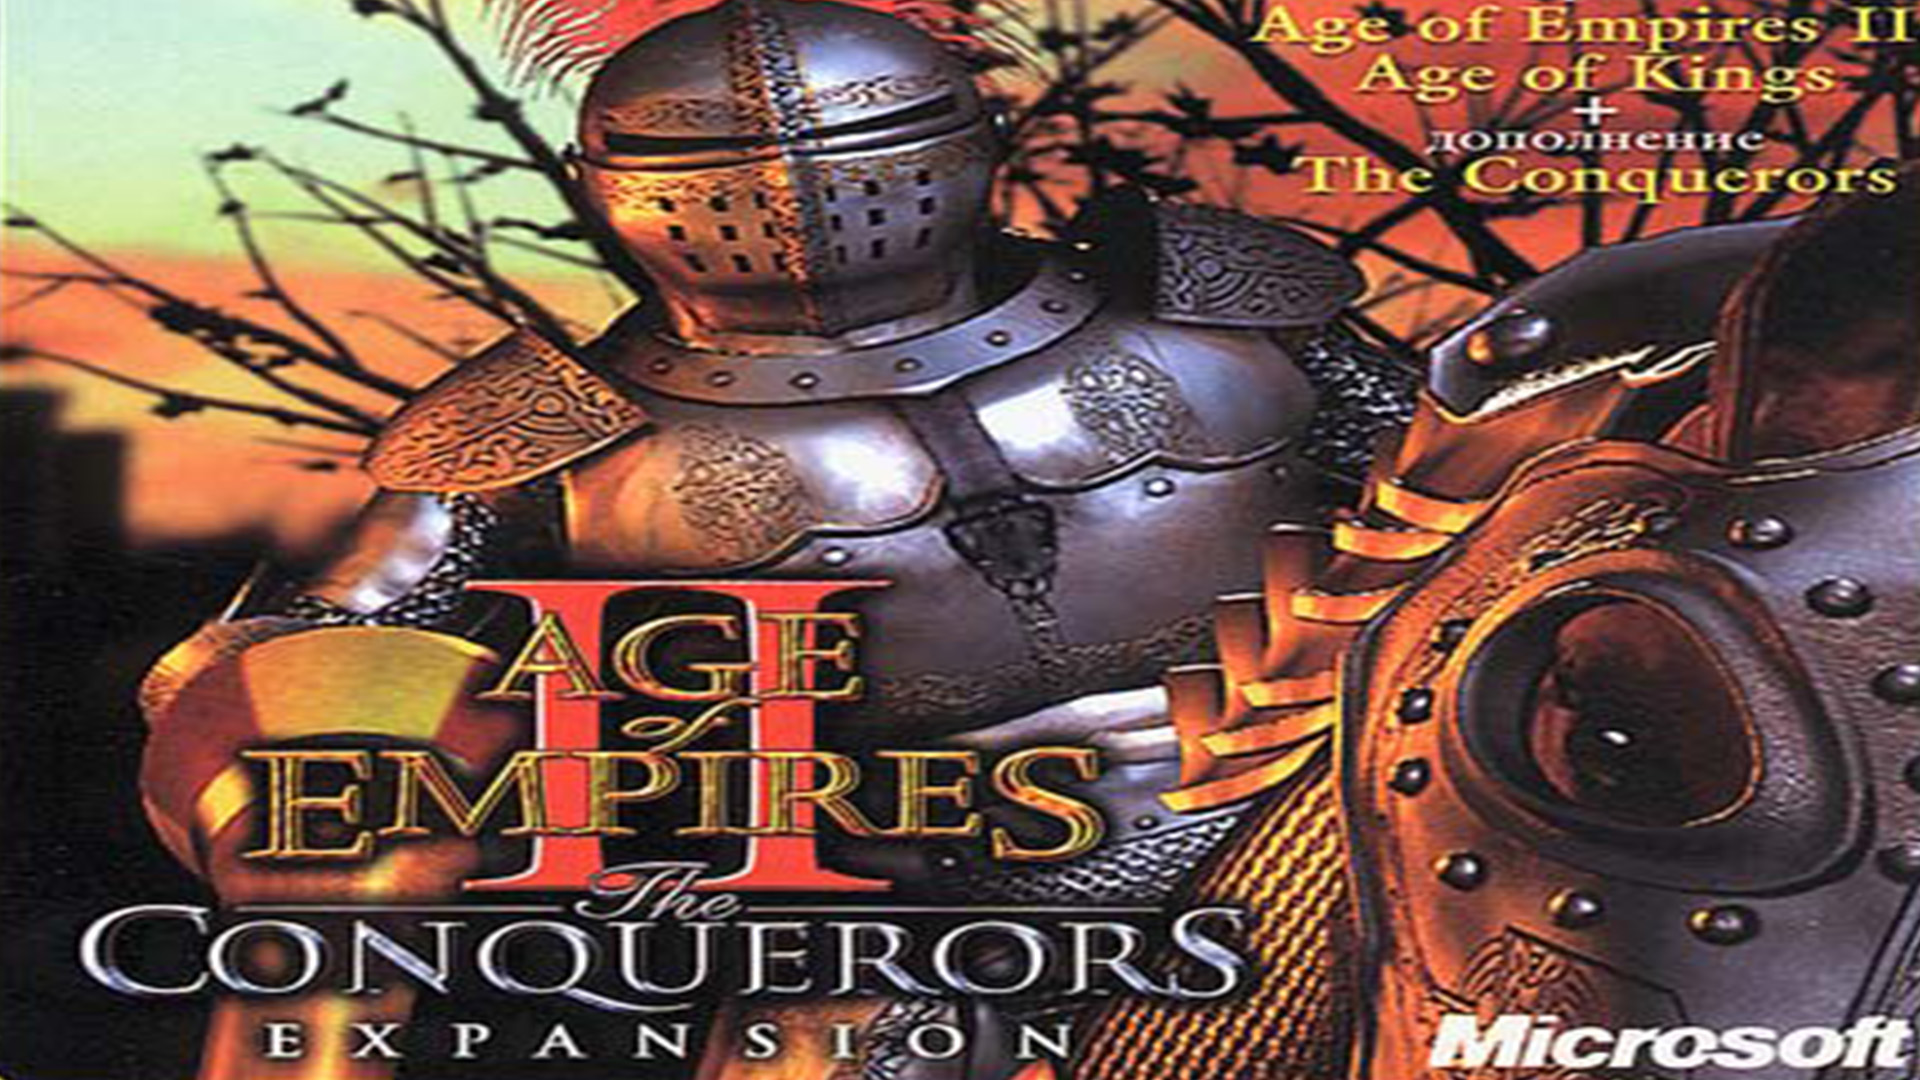 age of empires 2 the conquerors v1.5 no cd